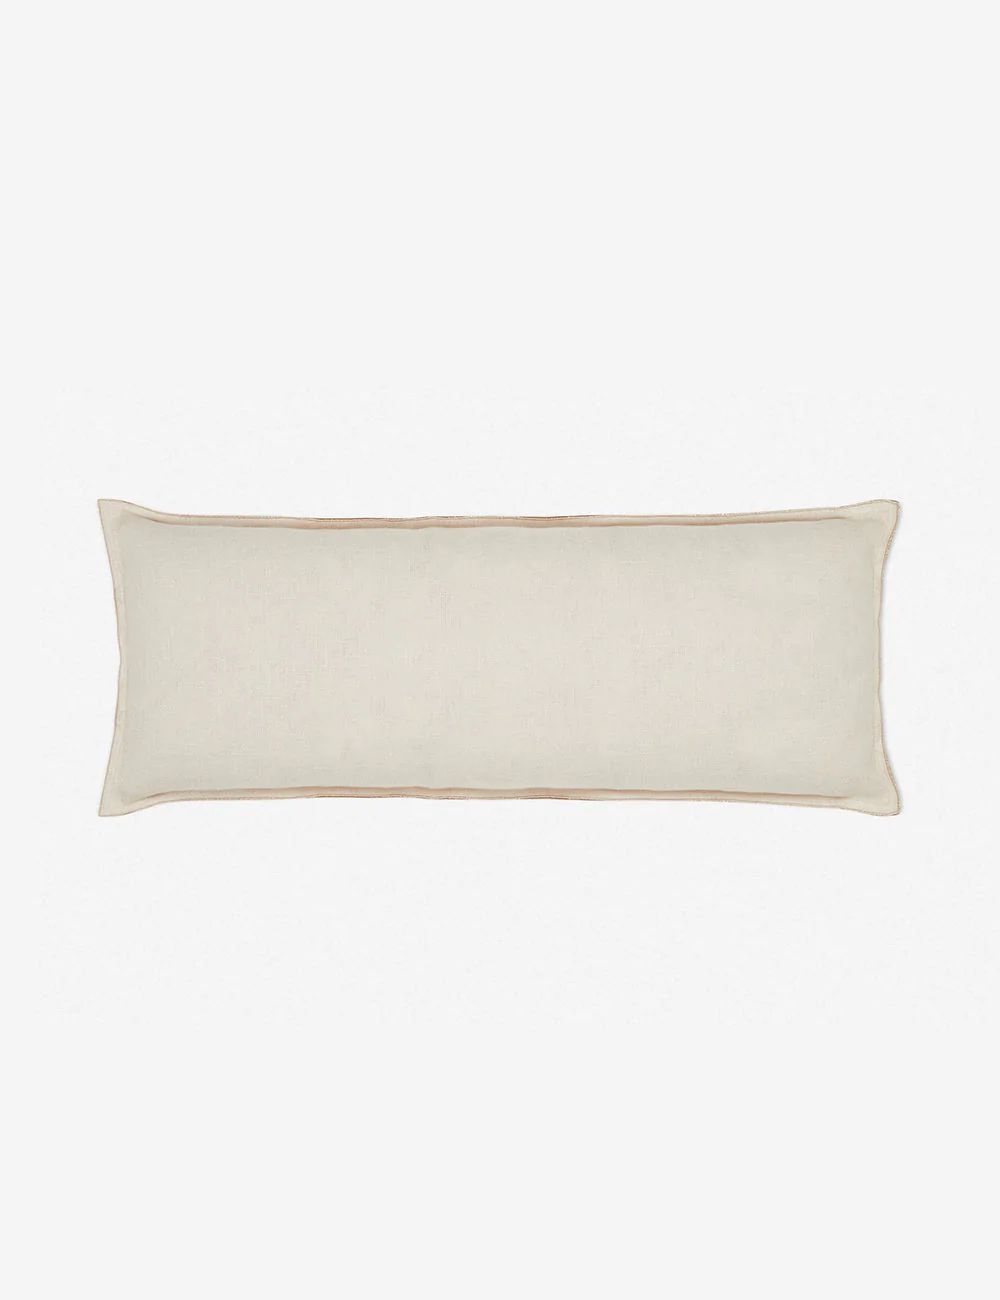 Arlo Linen Pillow | Lulu and Georgia 